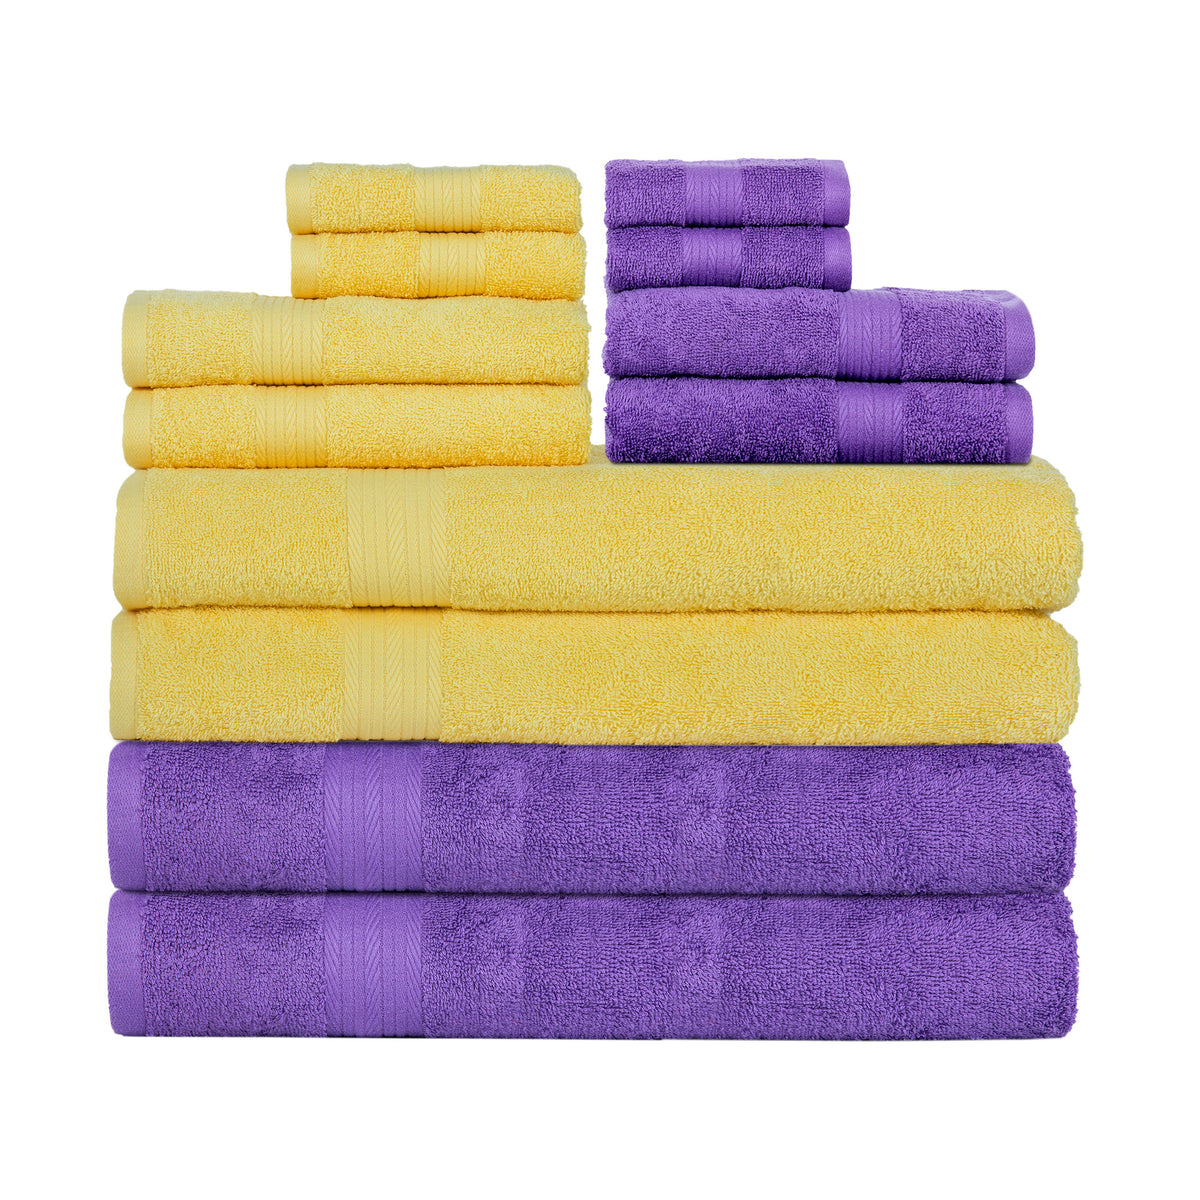 Towel Set - Pack of 12